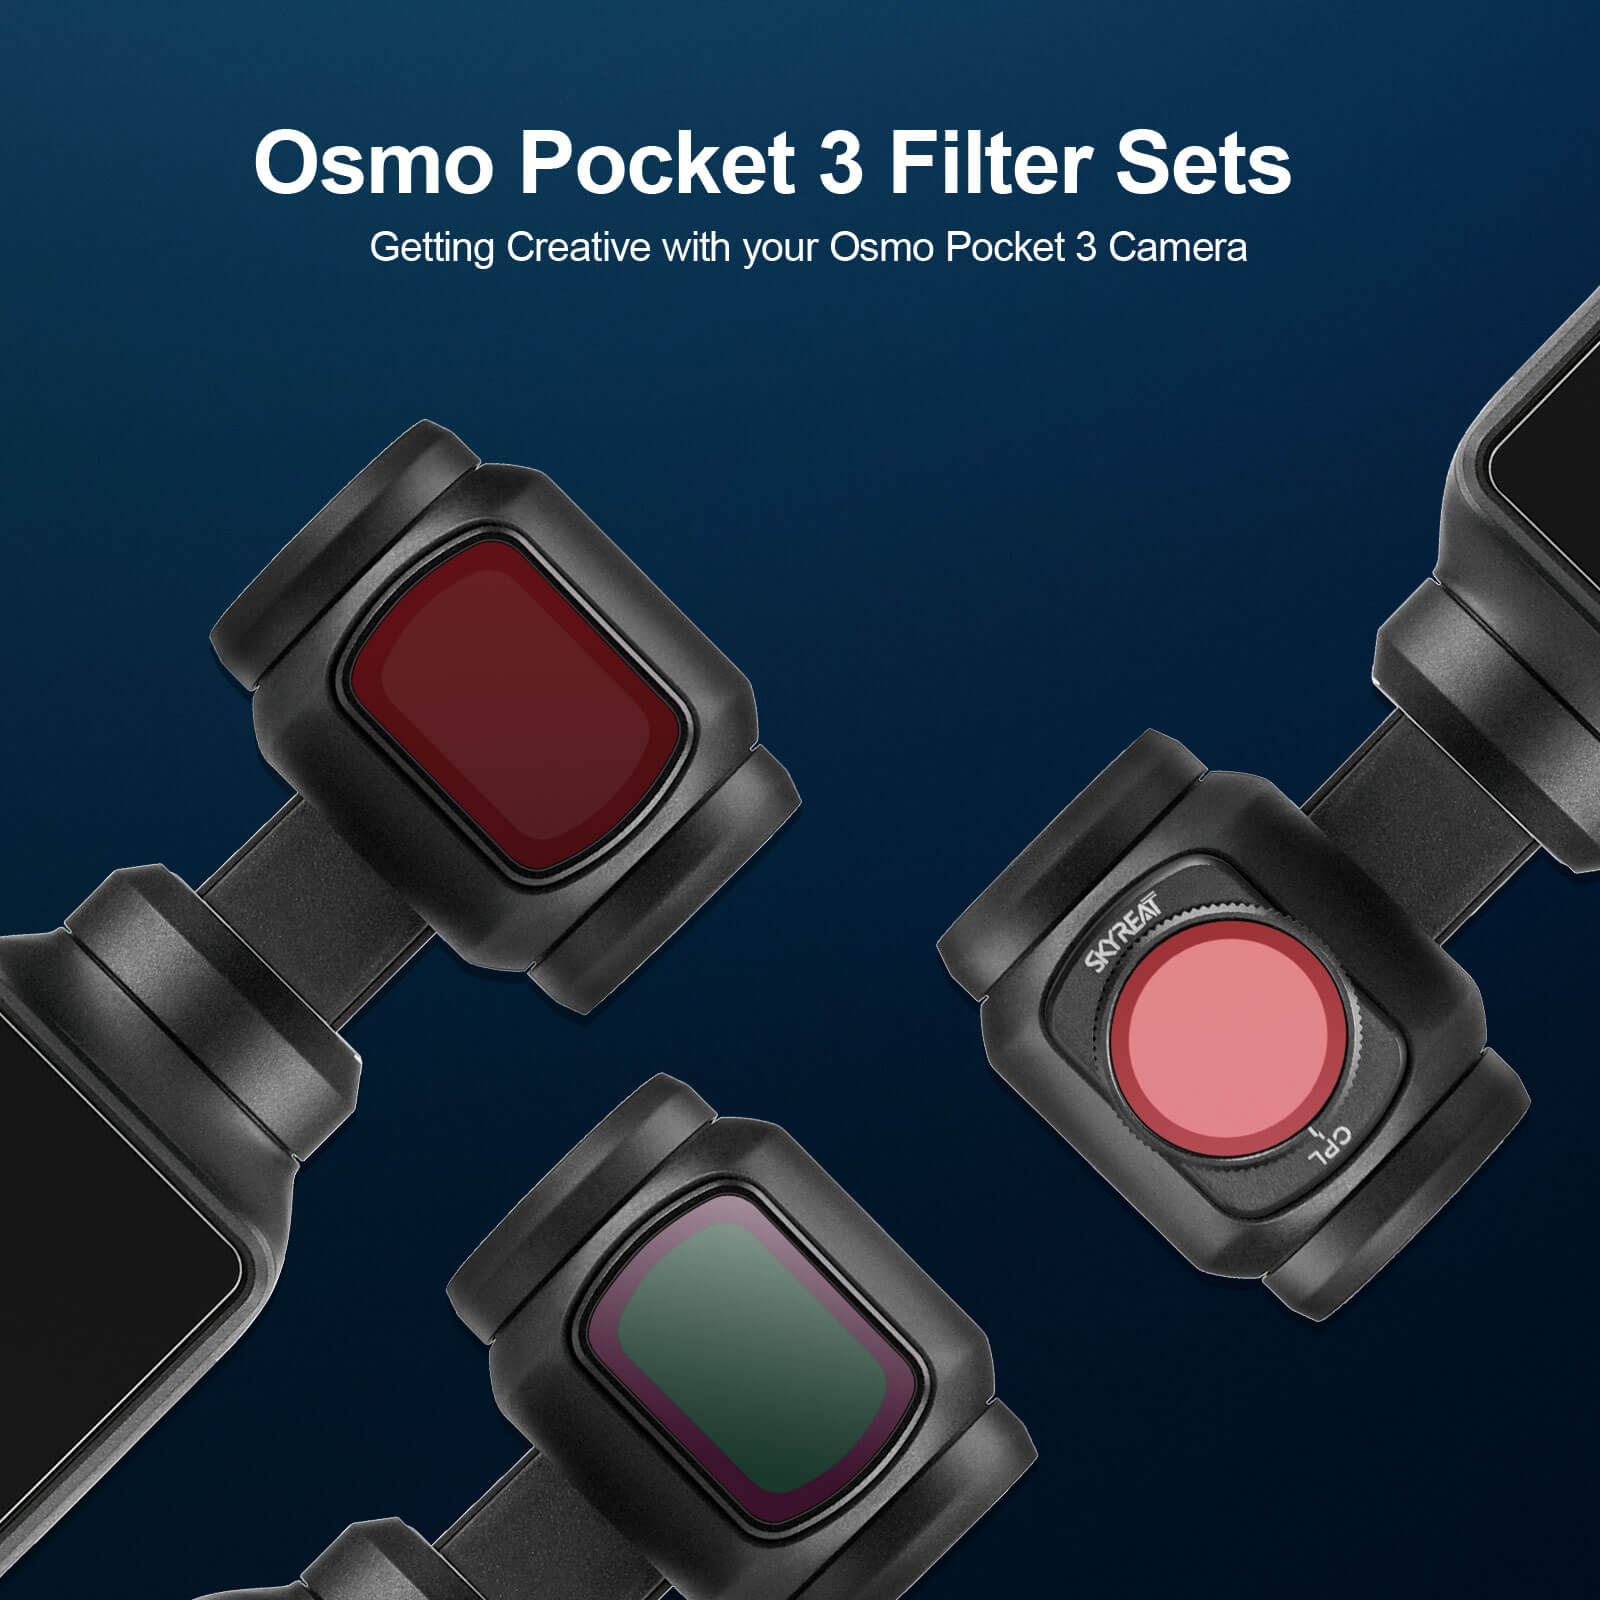 Osmo Pocket 3 - Creator Combo